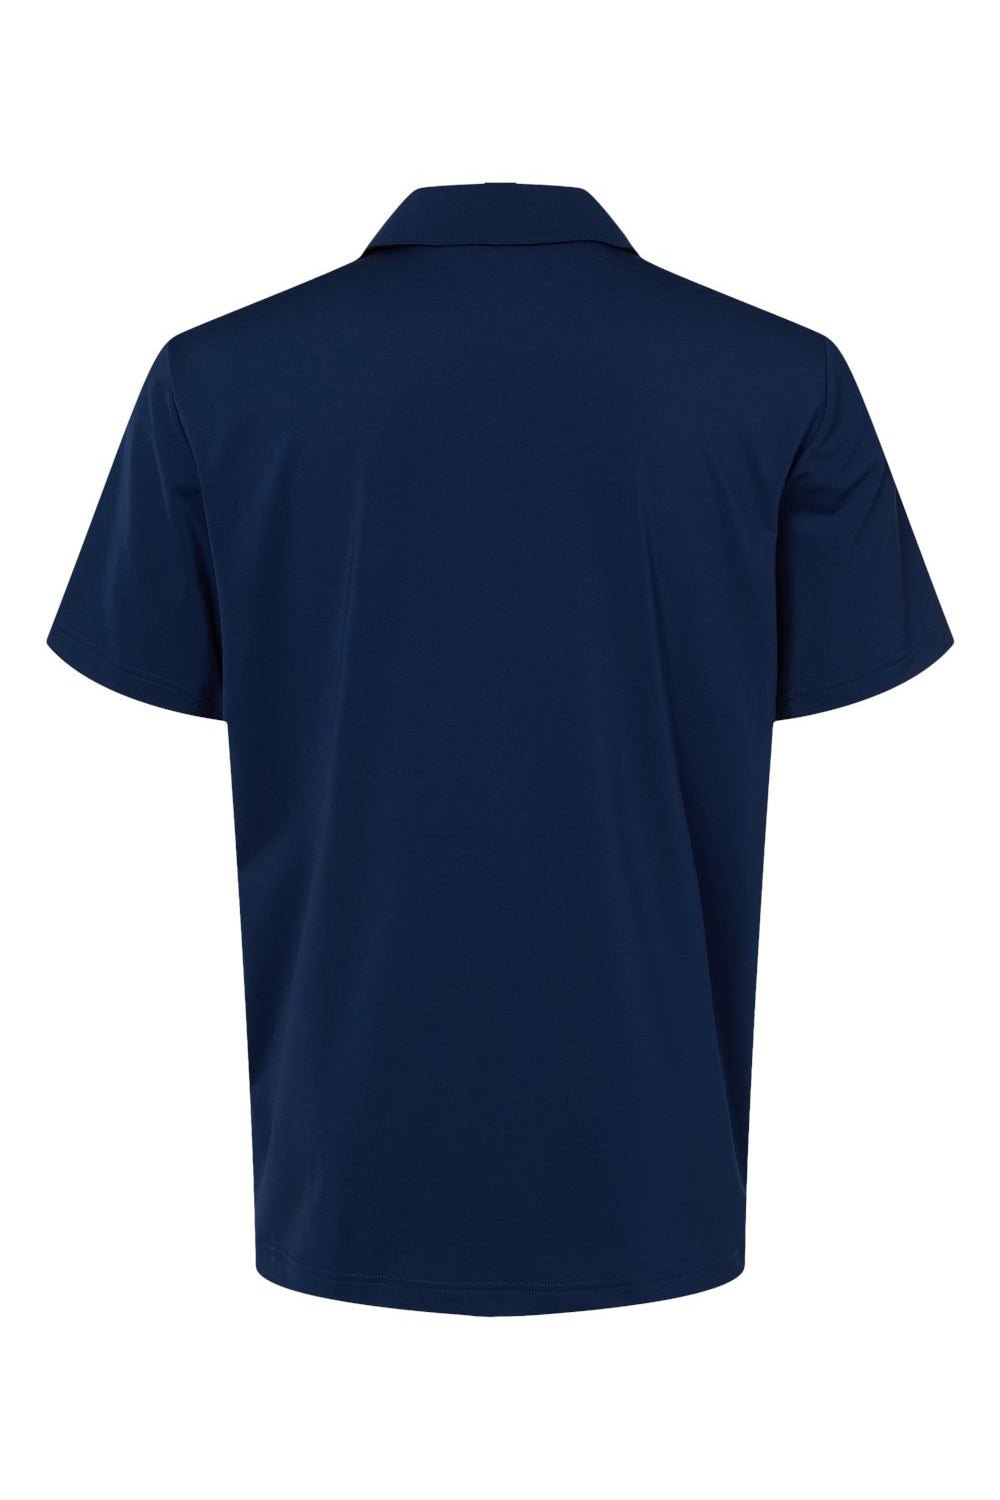 Adidas A514 Mens Ultimate Short Sleeve Polo Shirt Team Navy Blue Flat Back